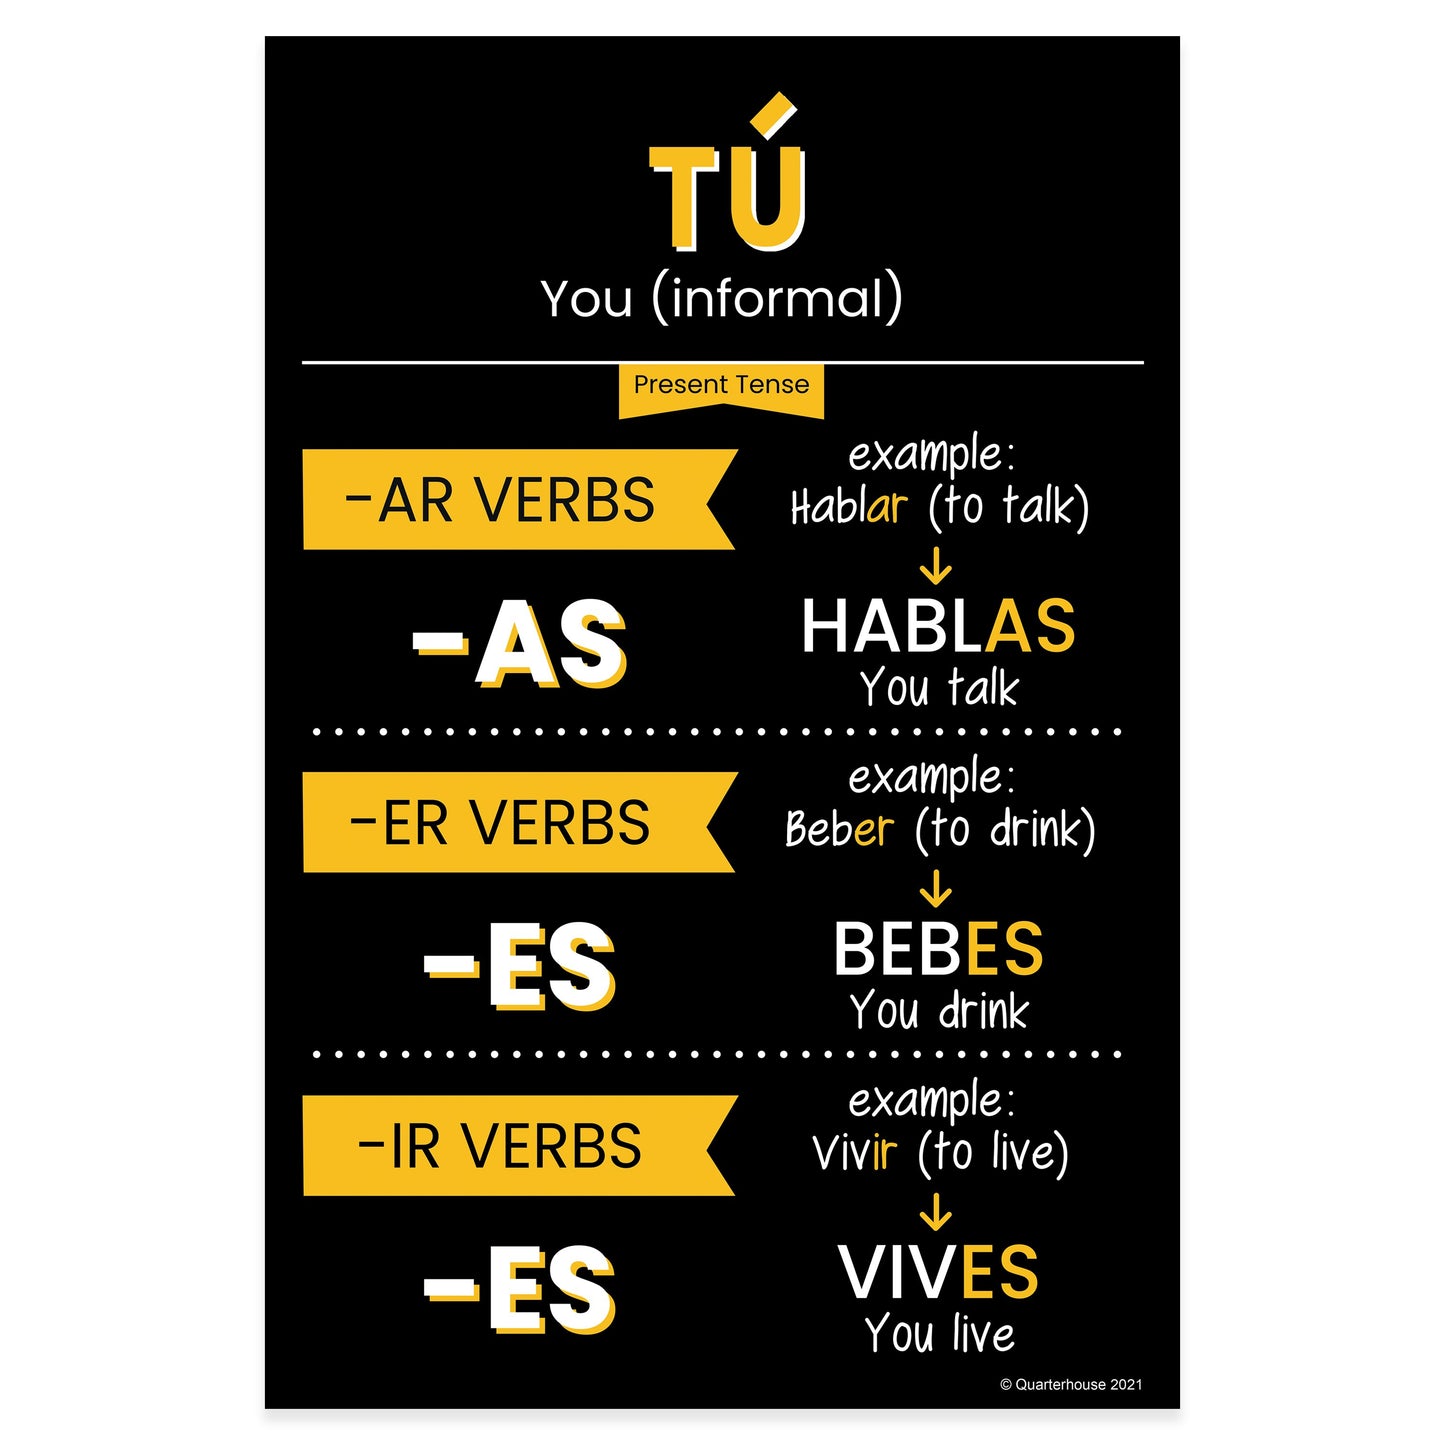 Quarterhouse Tú - Present Tense Spanish Verb Conjugation (Dark-Themed) Poster, Spanish and ESL Classroom Materials for Teachers